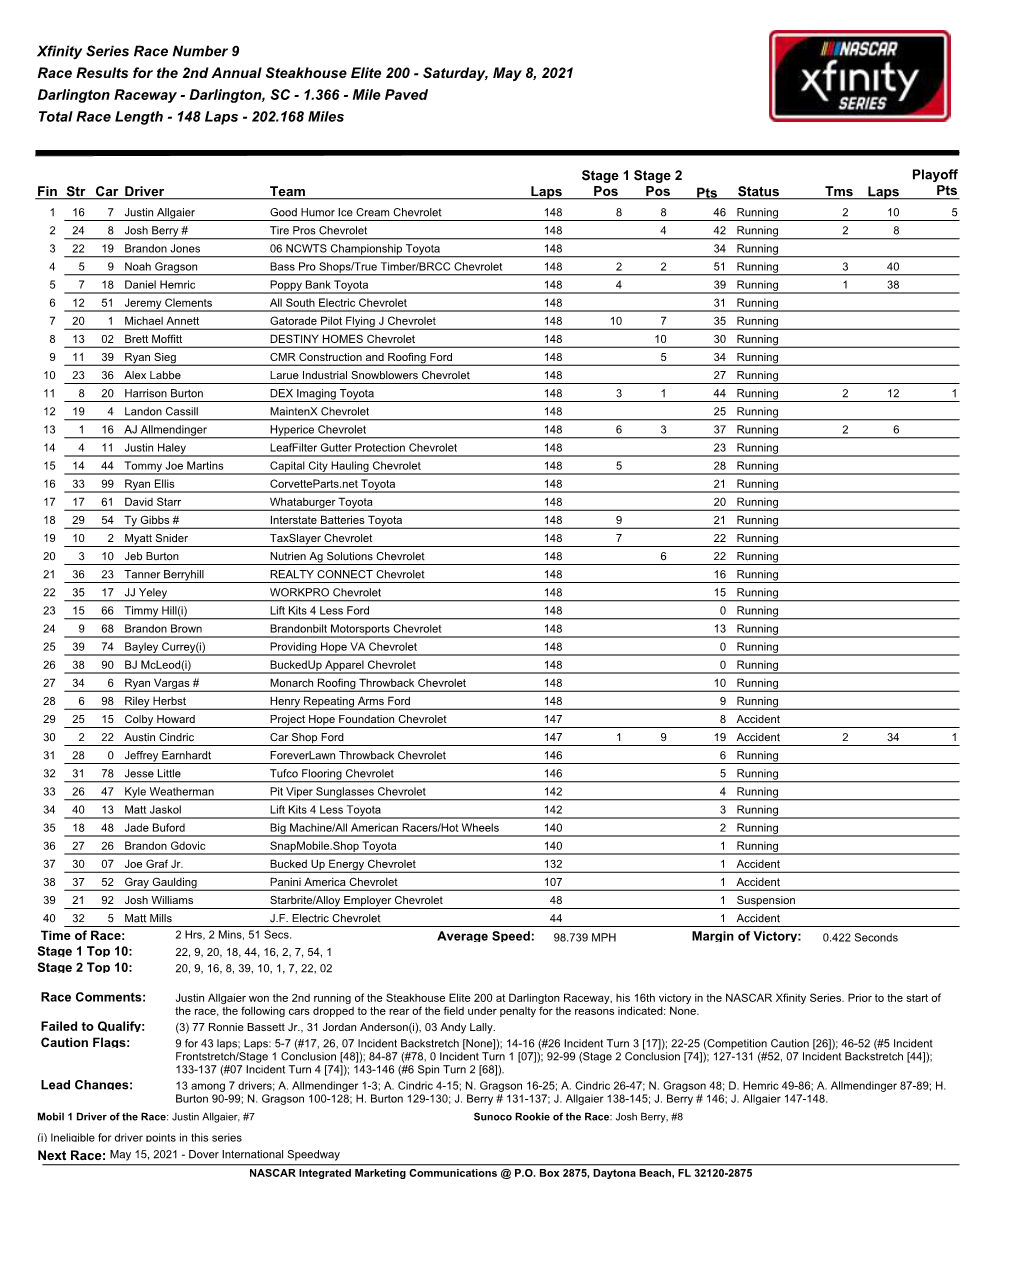 Xfinity Series Race Results